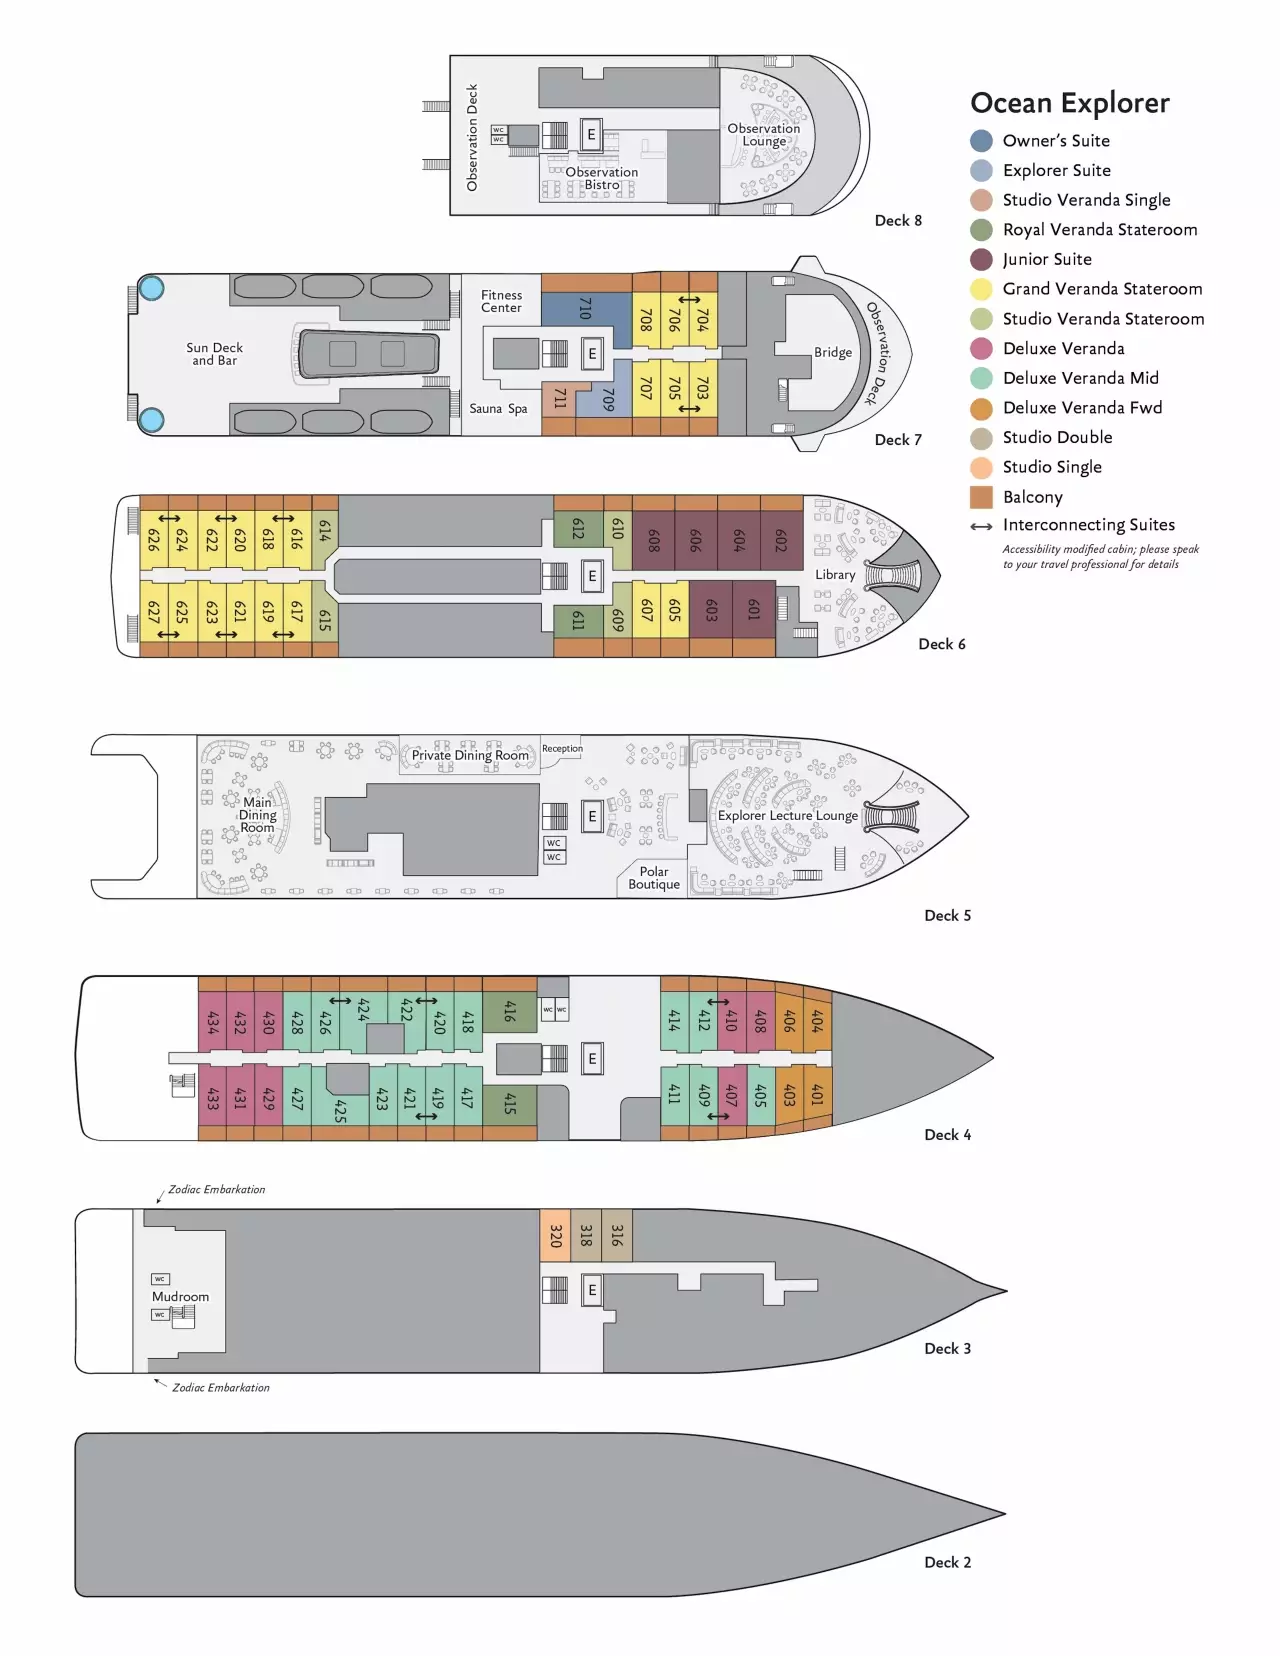 Deck plan of Ocean Explorer with 6 passenger decks, 13 cabin categories, various social areas & capacity for 138 guests.